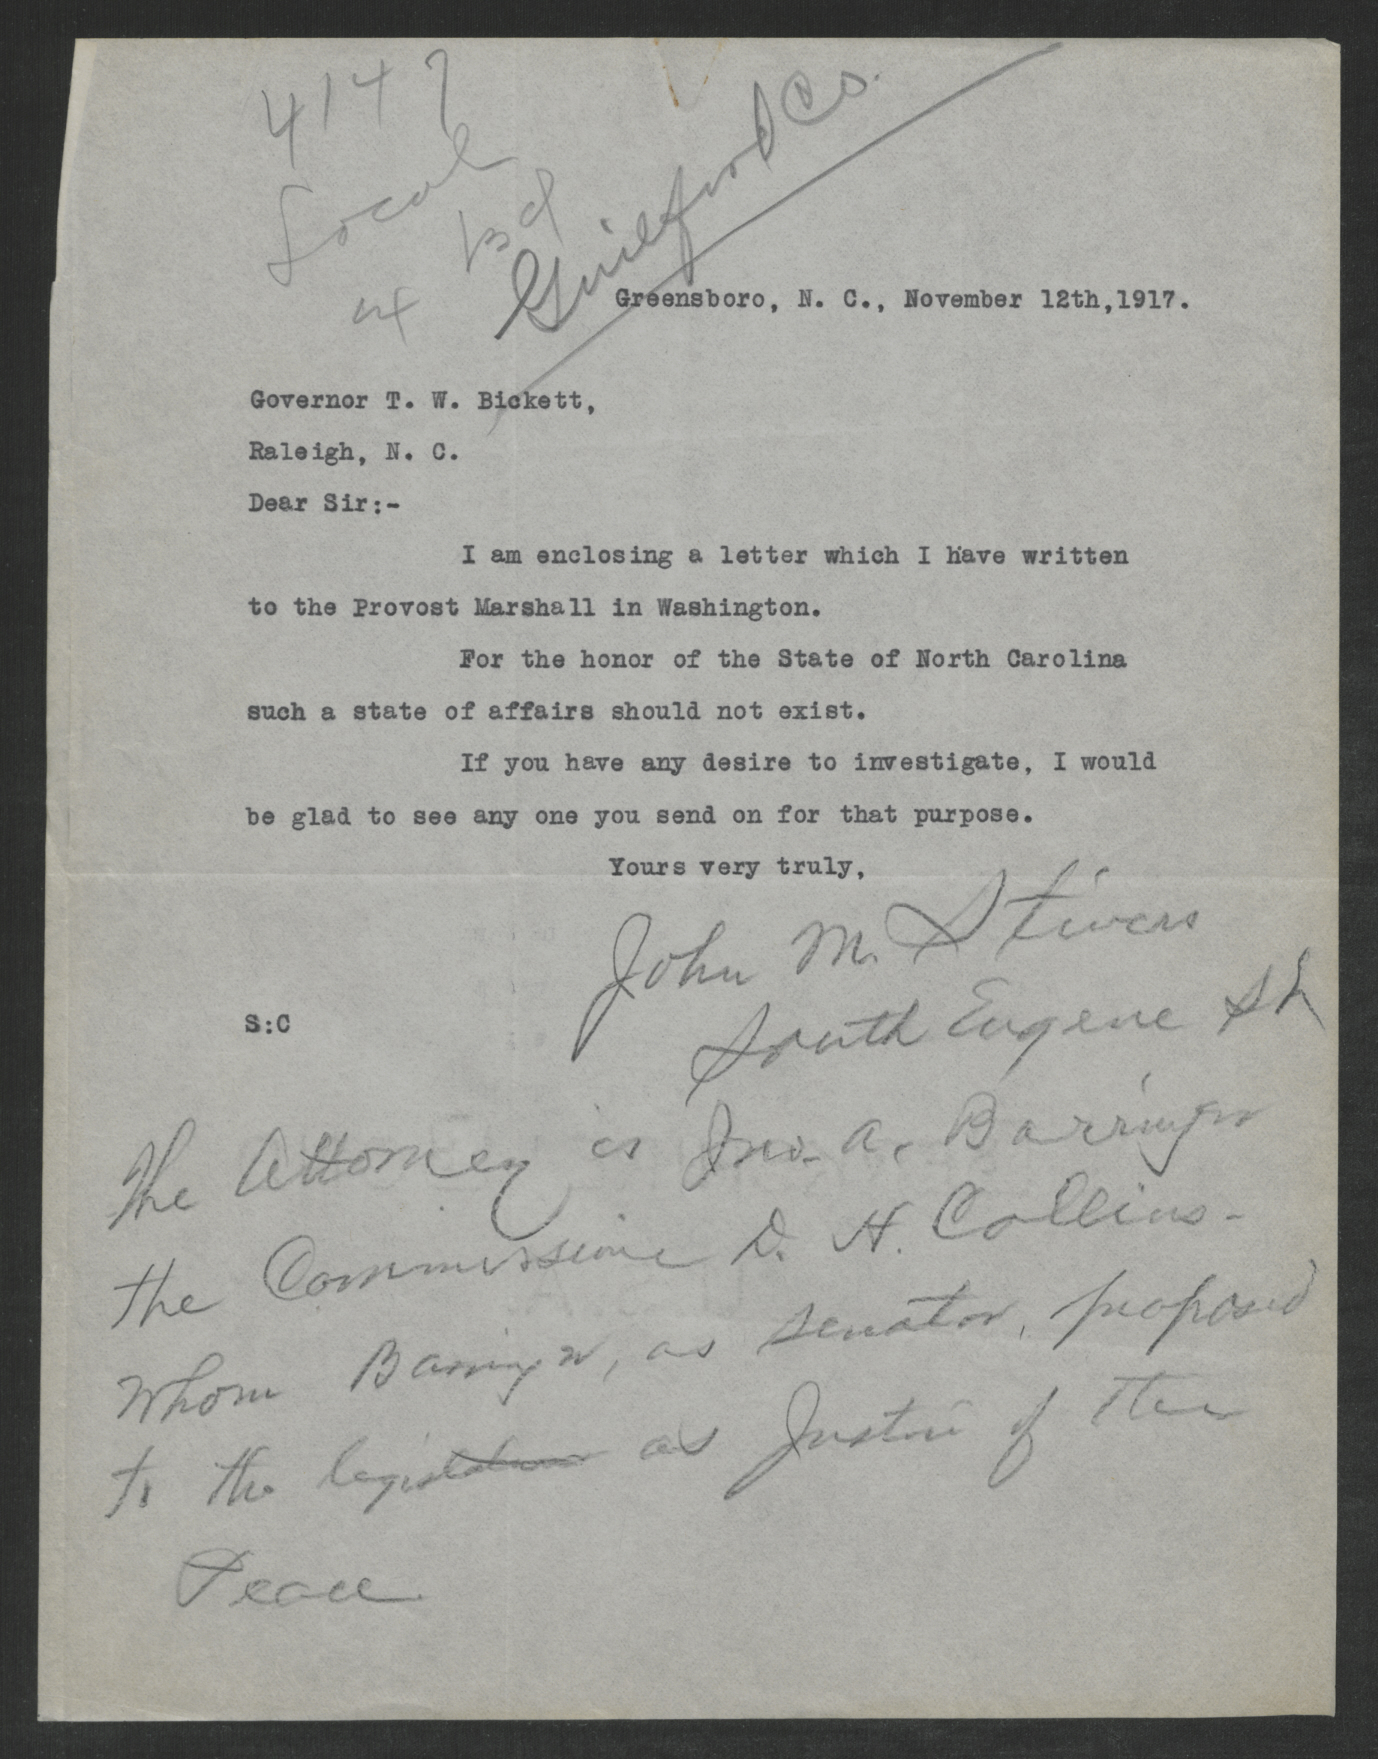 Letter from John M. Stivers to Gov. Bickett, November 12, 1917